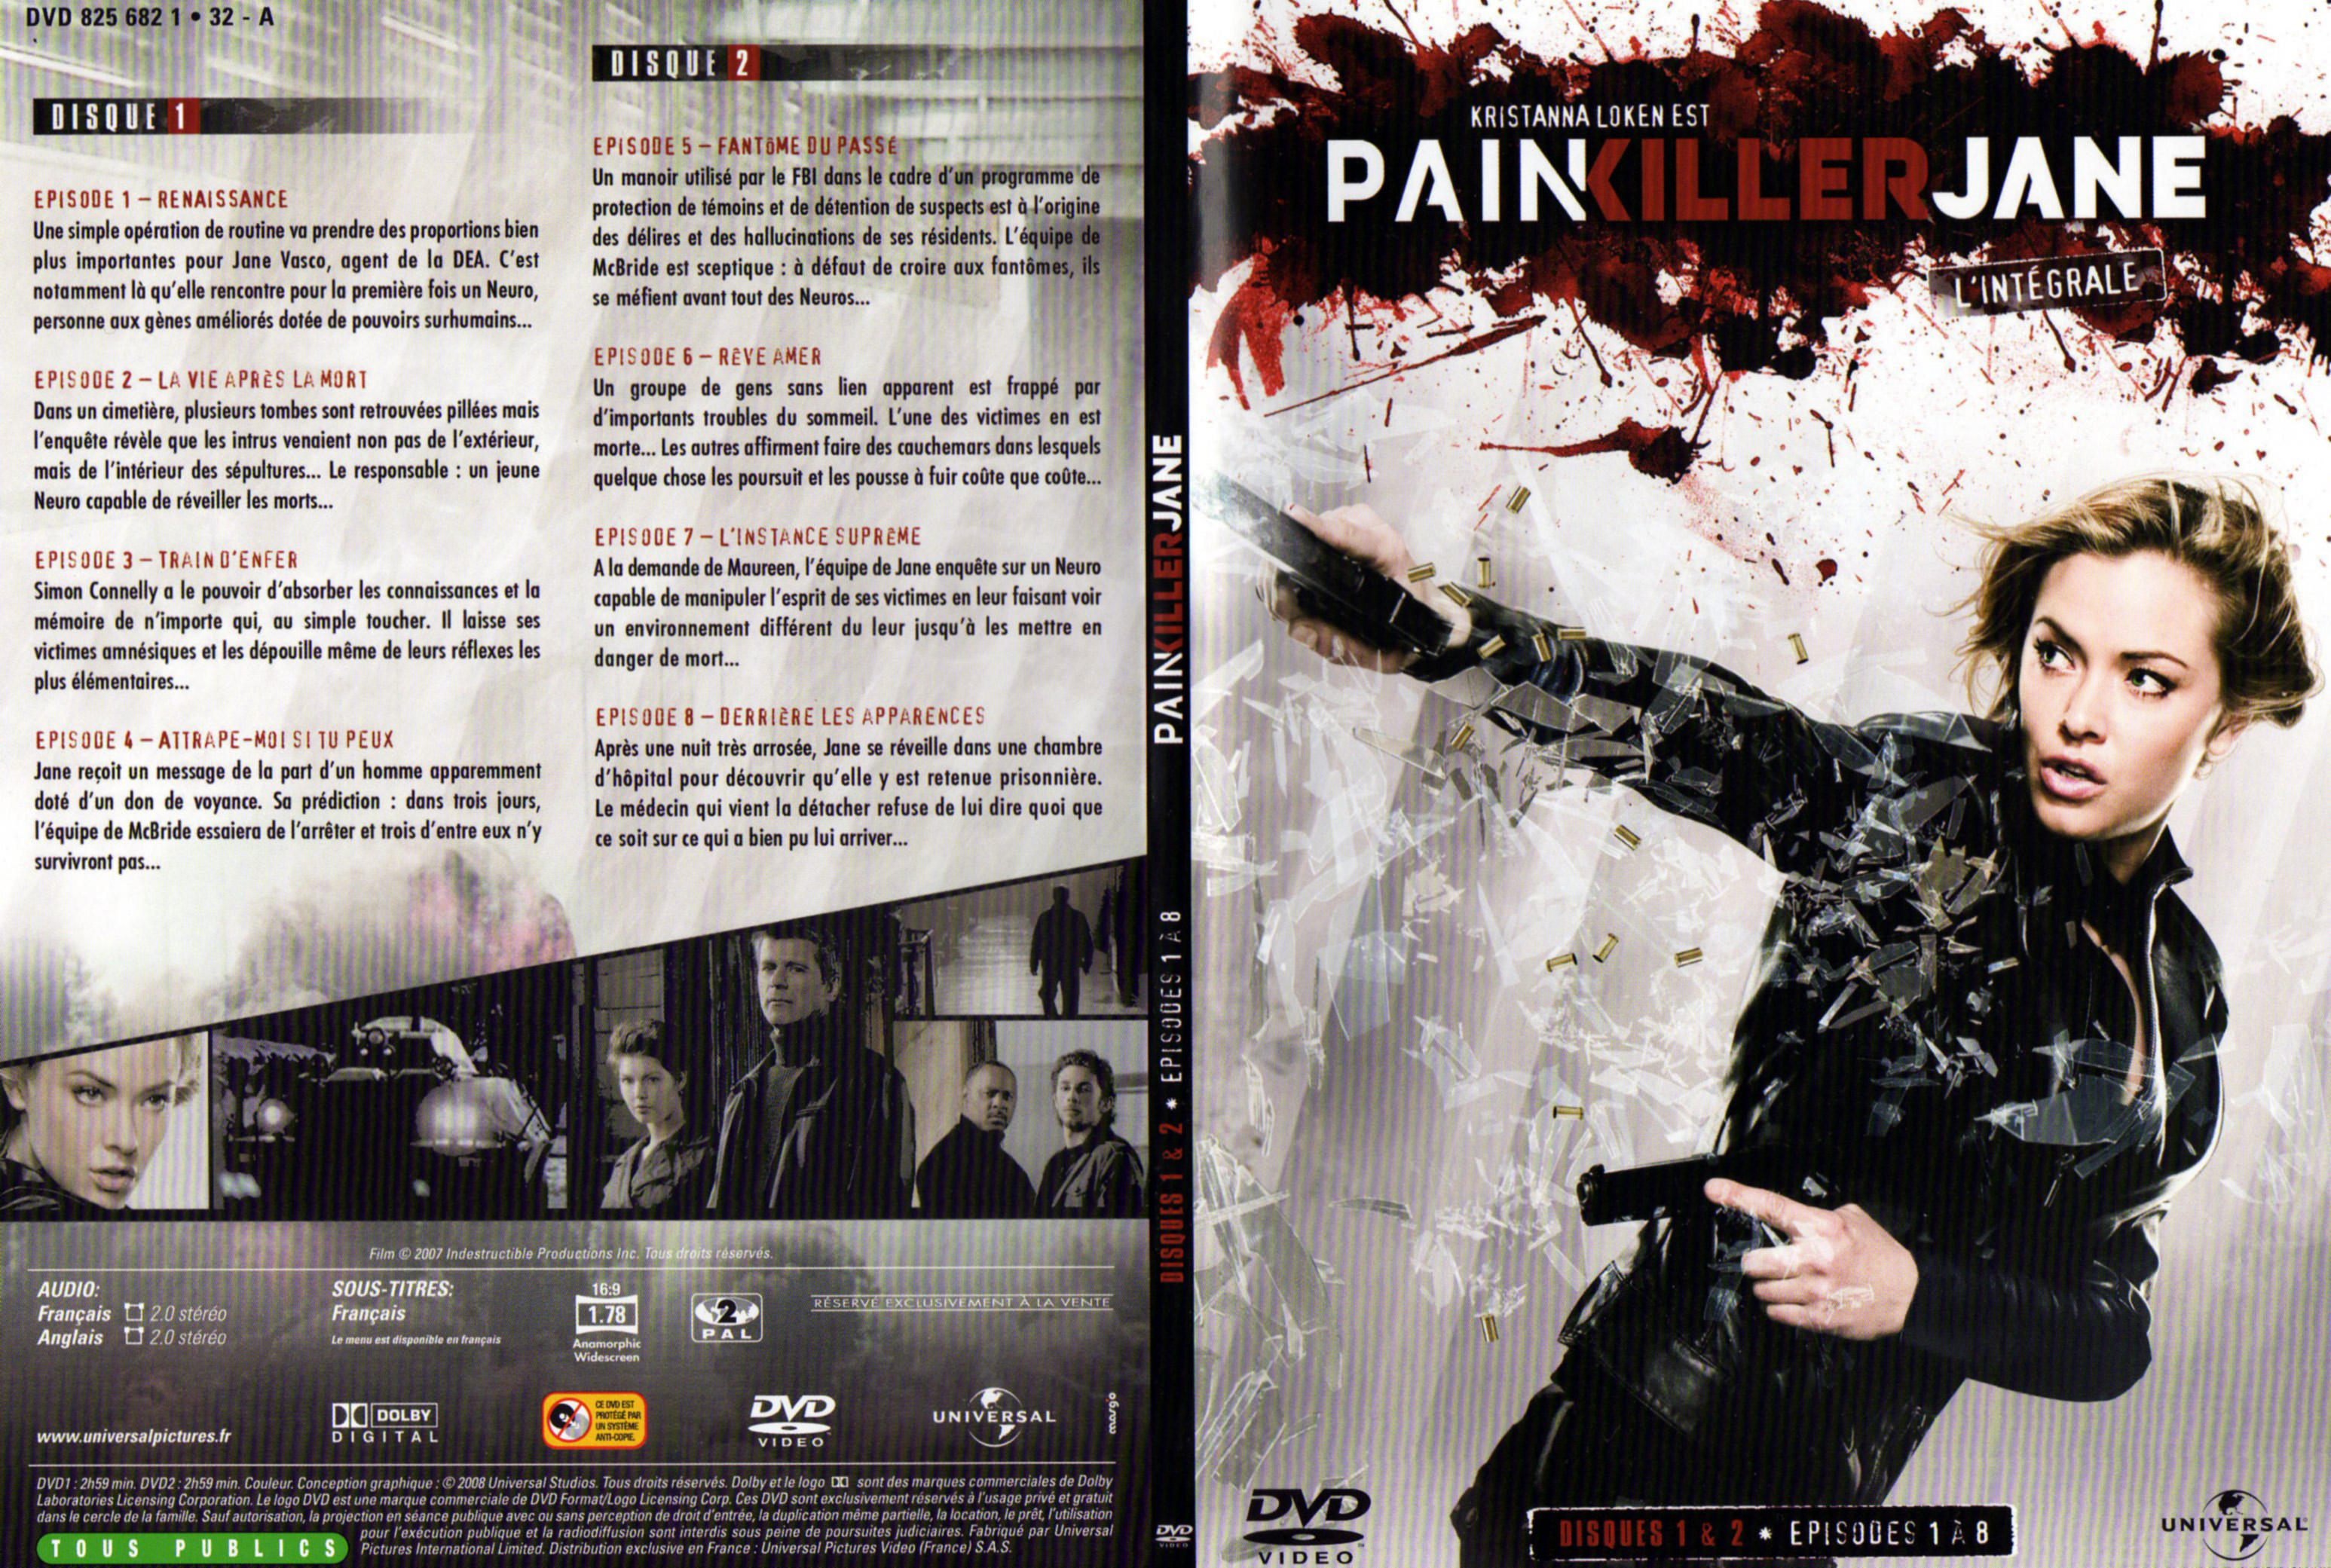 Jaquette DVD Painkiller Jane Saison 1 DVD 1